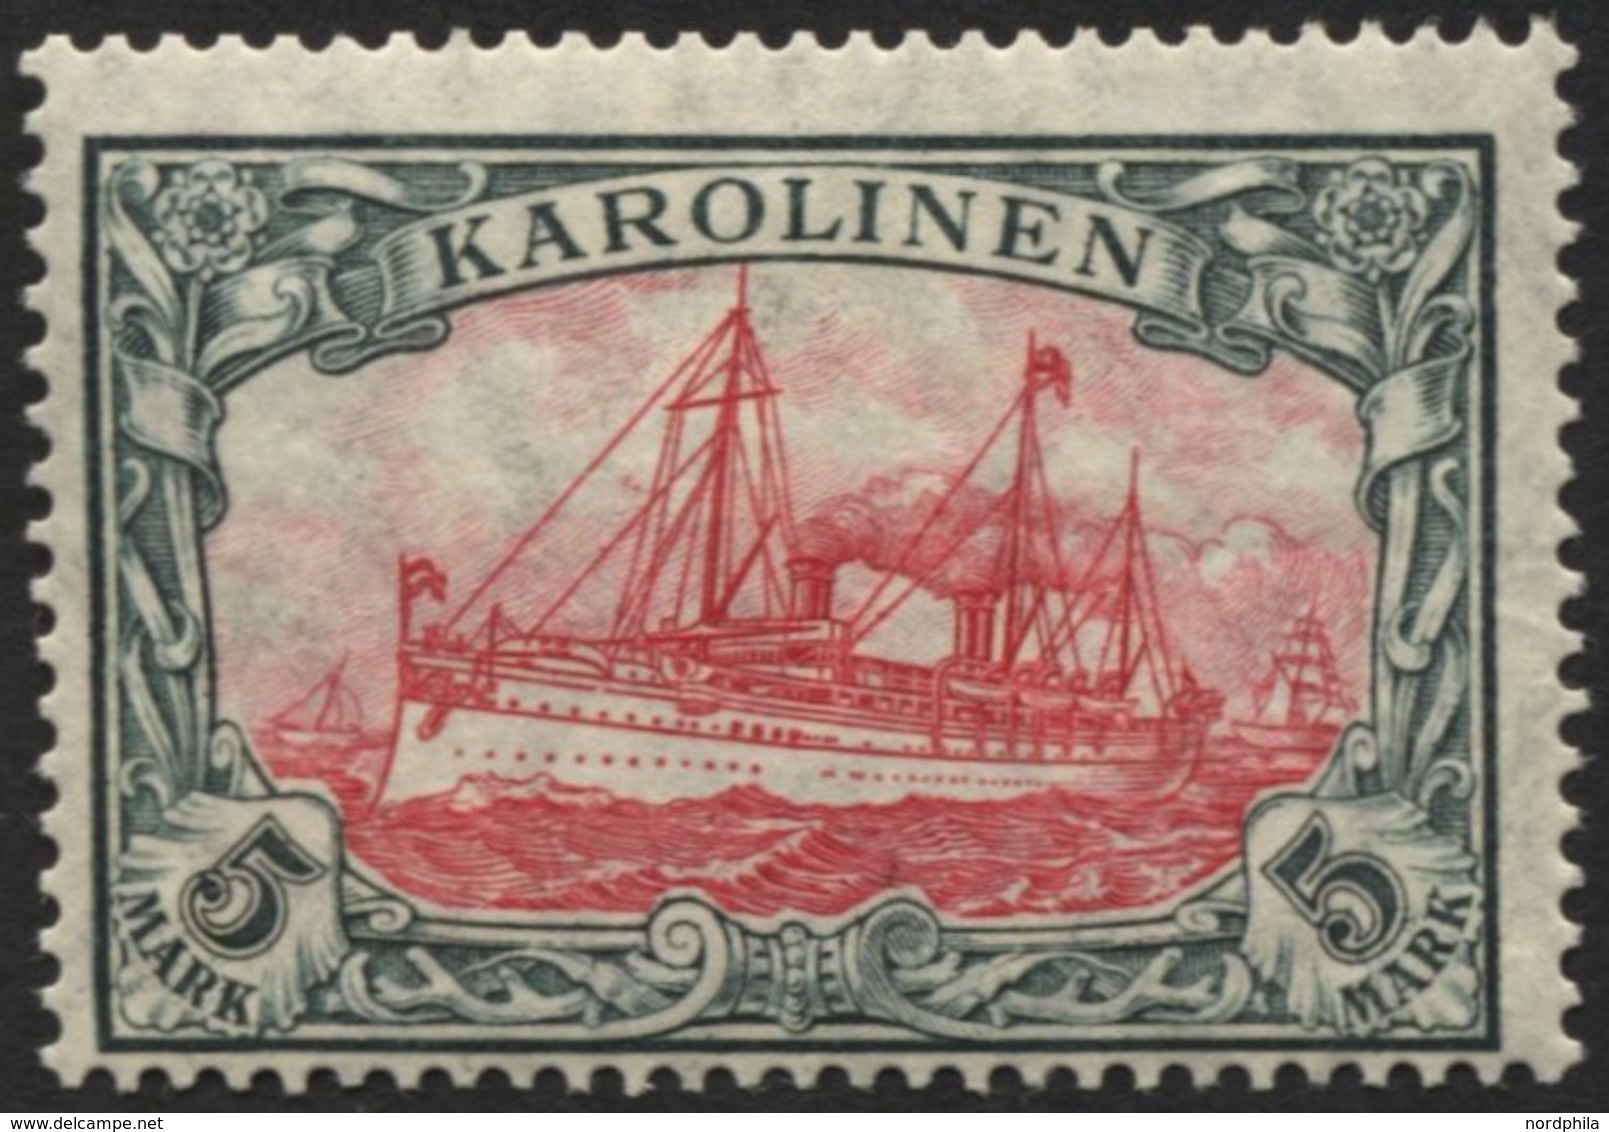 KAROLINEN 22IA *, 1915, 5 M. Grünschwarz/dunkelkarmin, Mit Wz., Friedensdruck, Falzrest, Pracht, Gepr. Jäschke-L., Mi. 2 - Karolinen